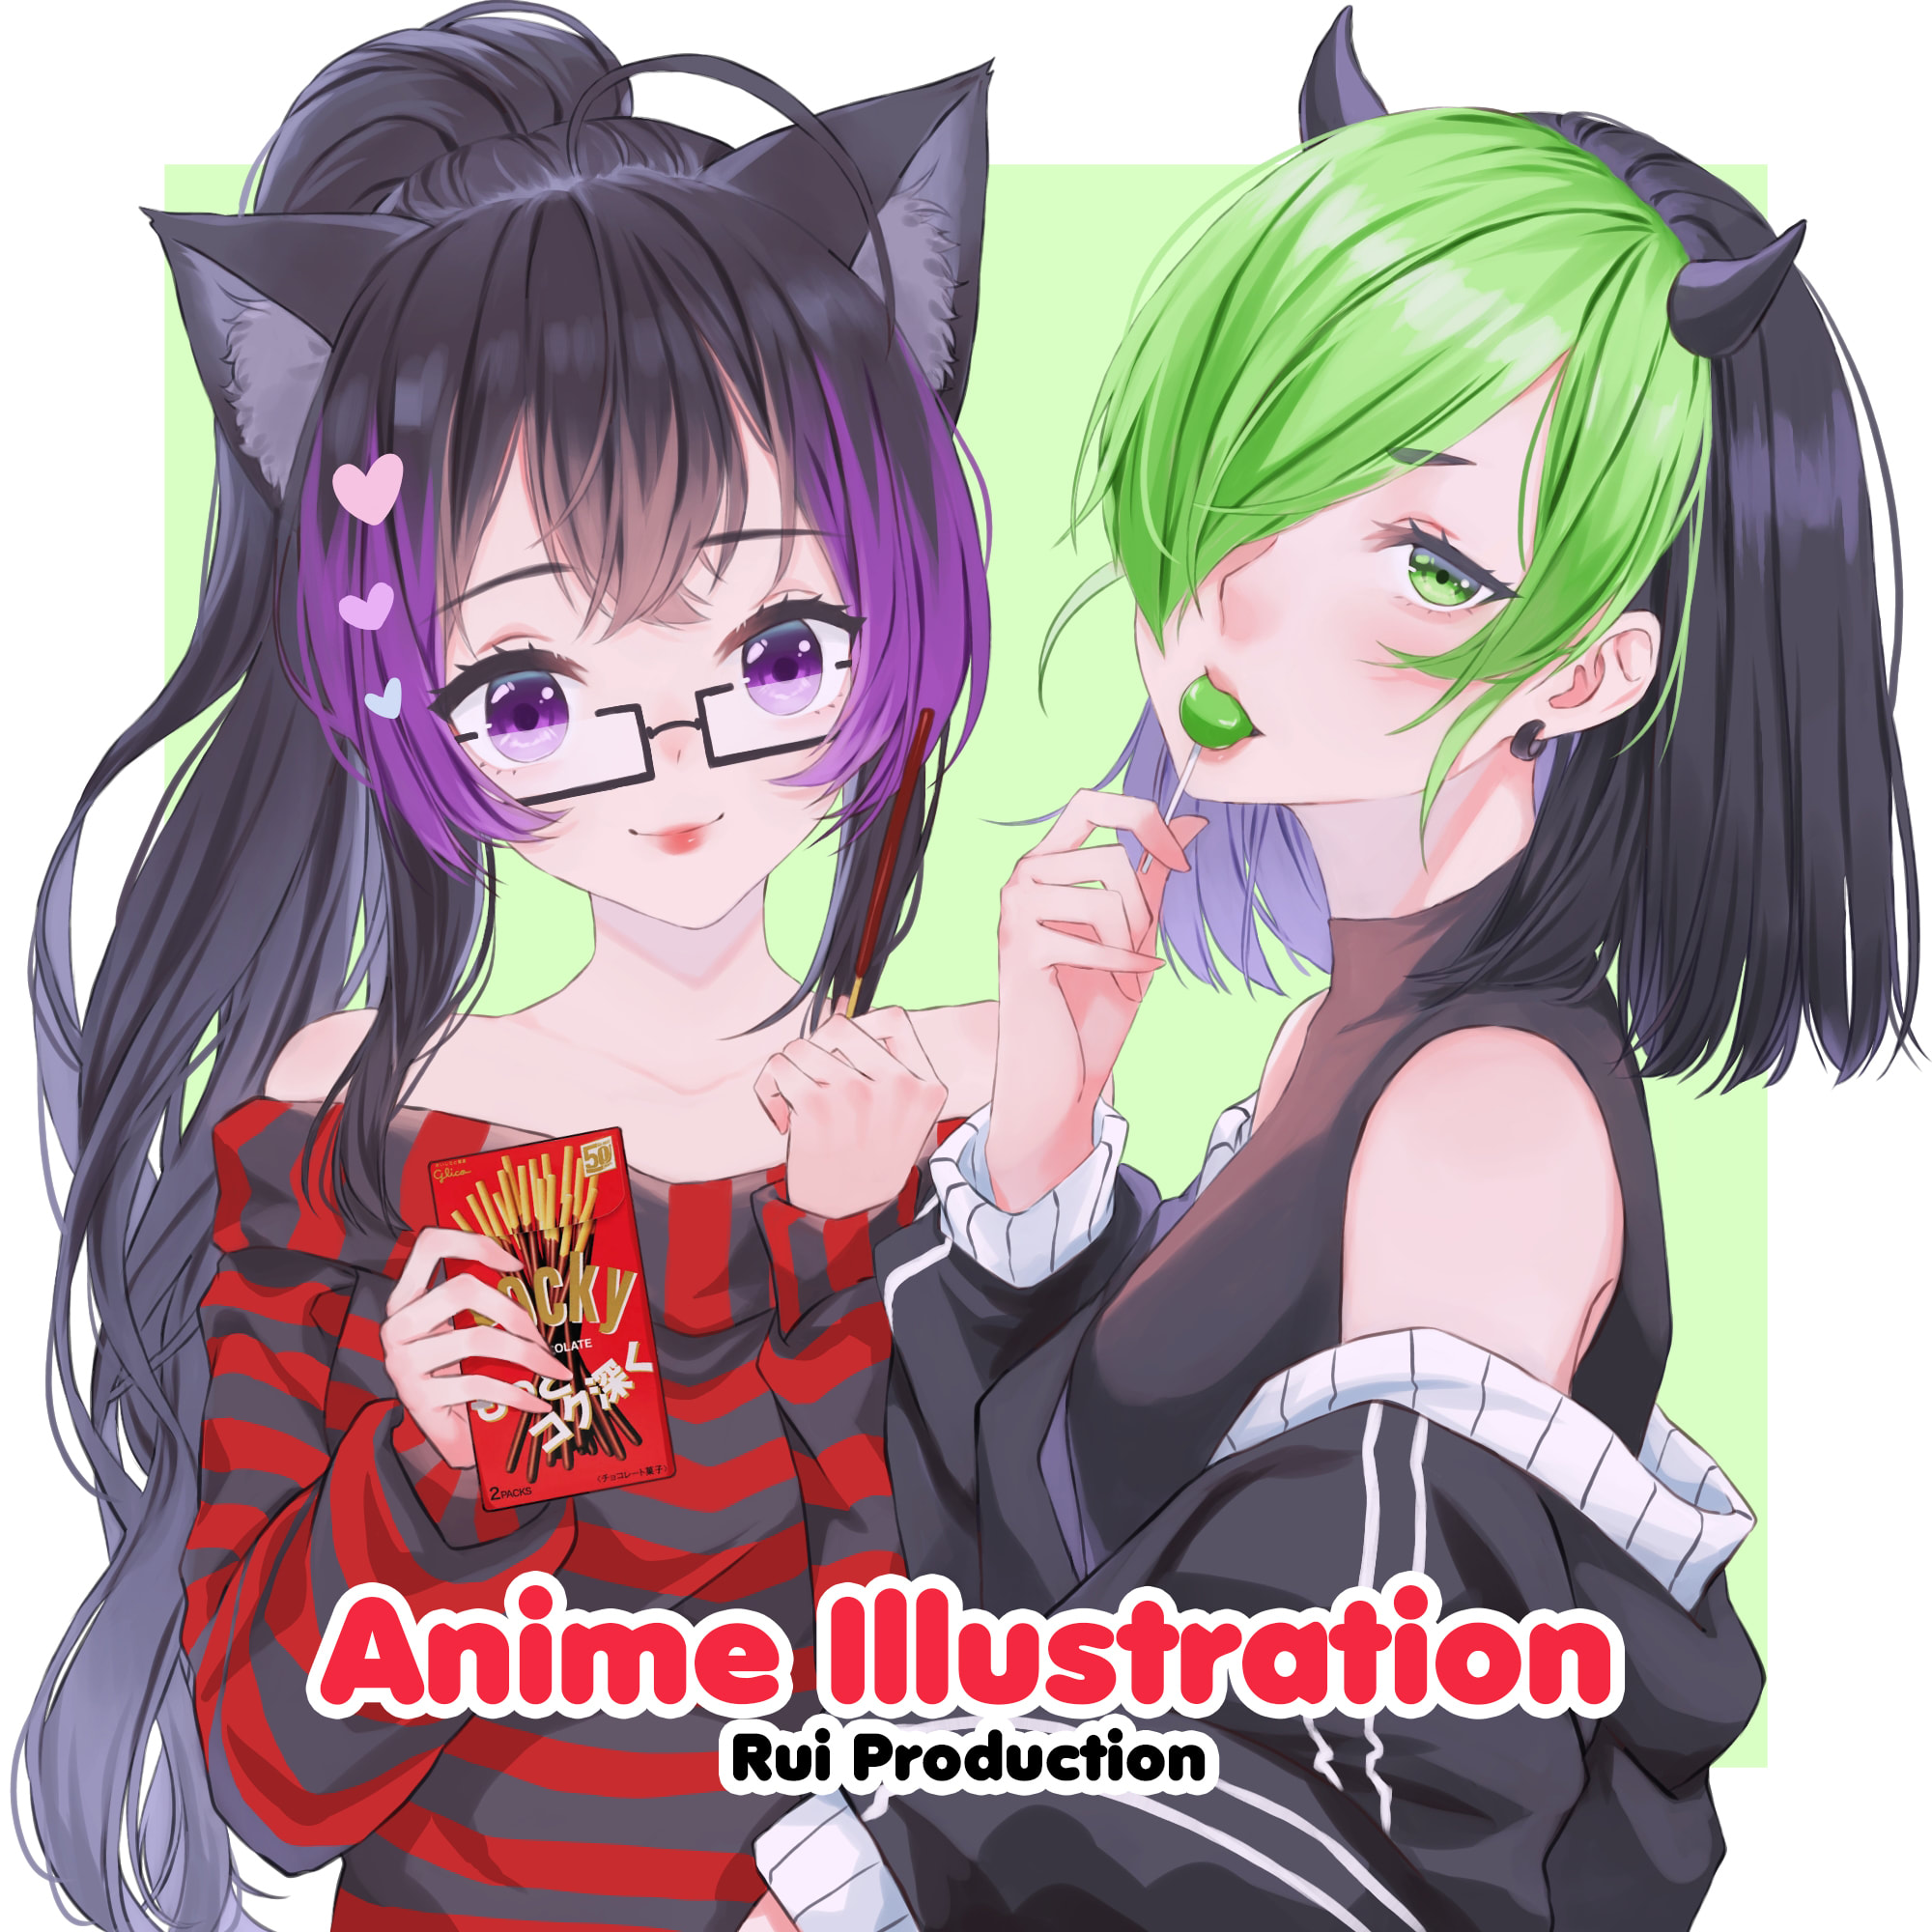 Anime Girl Friend Beta Maid Rendering Catgirl PNG, Clipart, Action Figure,  Anime, Black Hair, Brown Hair